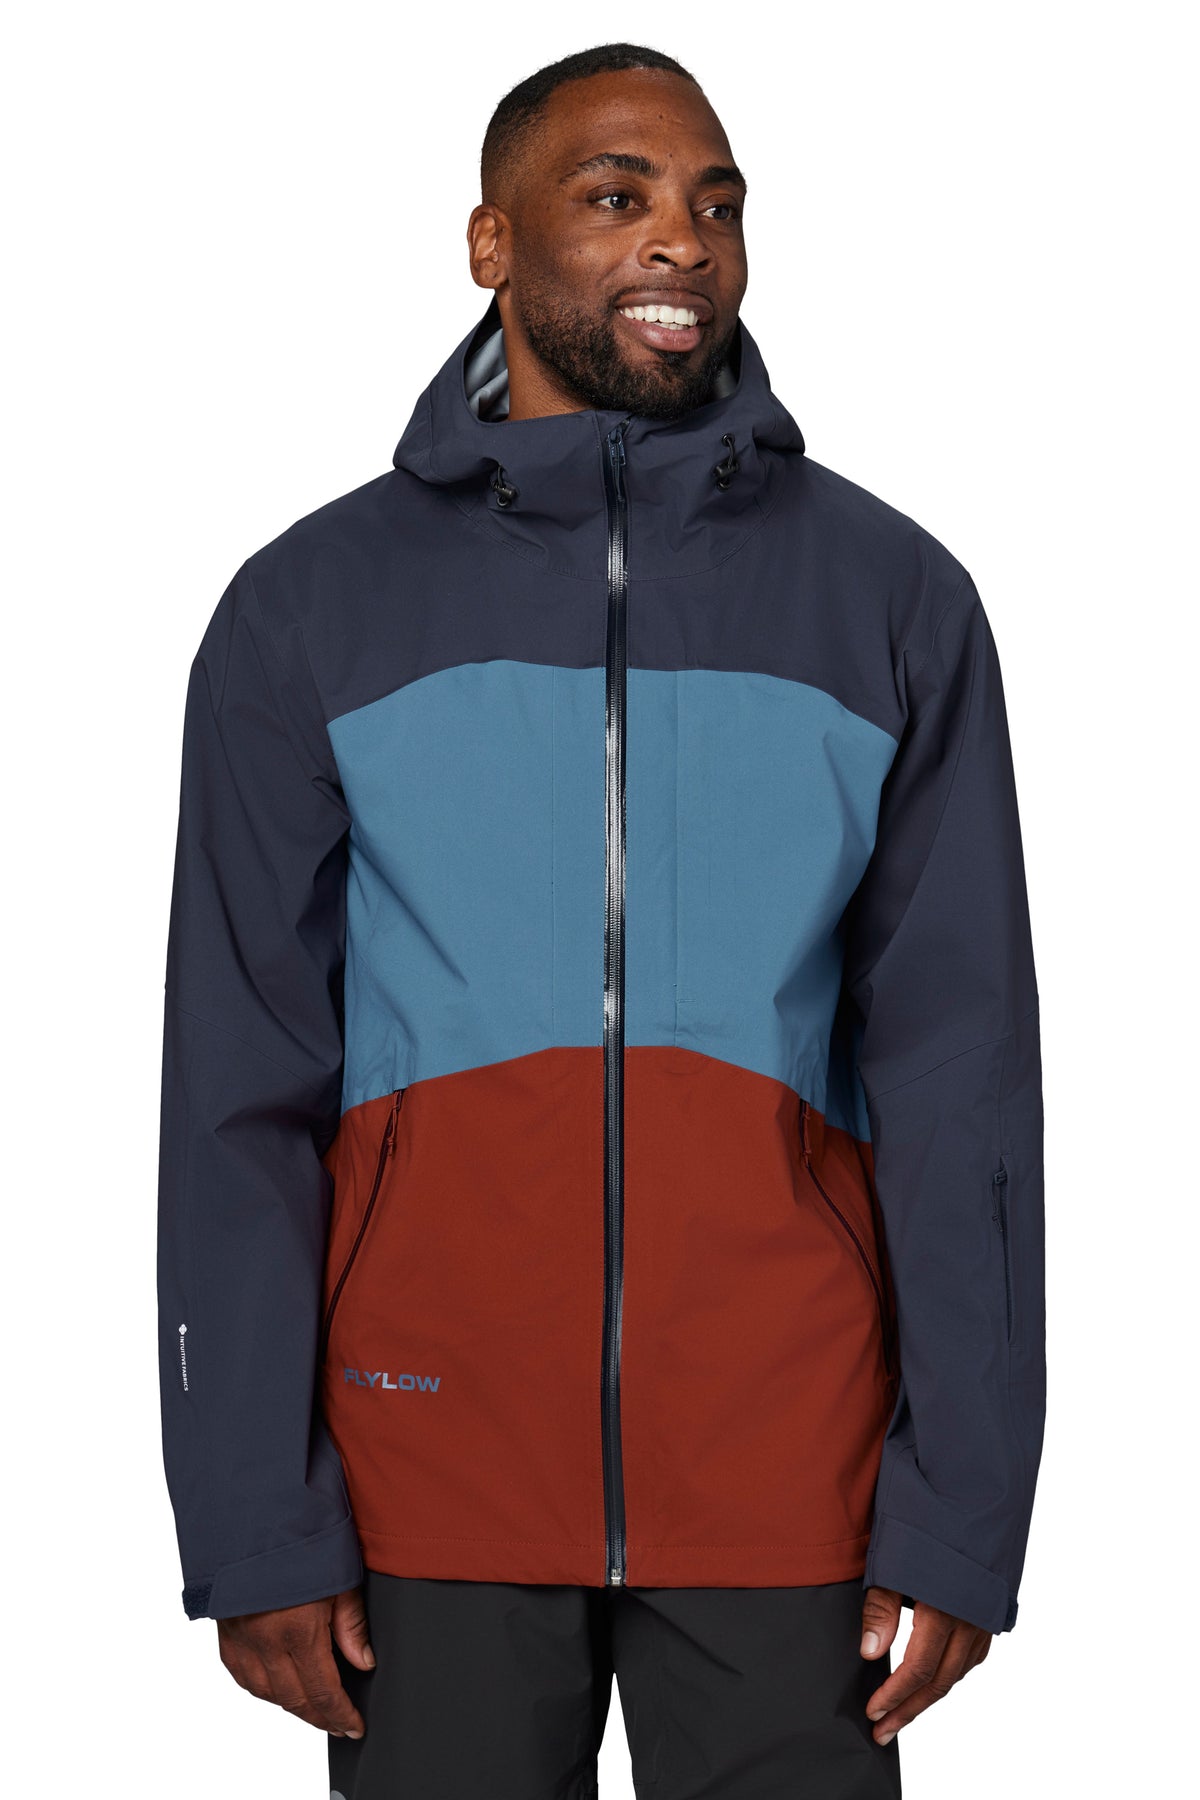 Flylow rain jacket - Athletic apparel